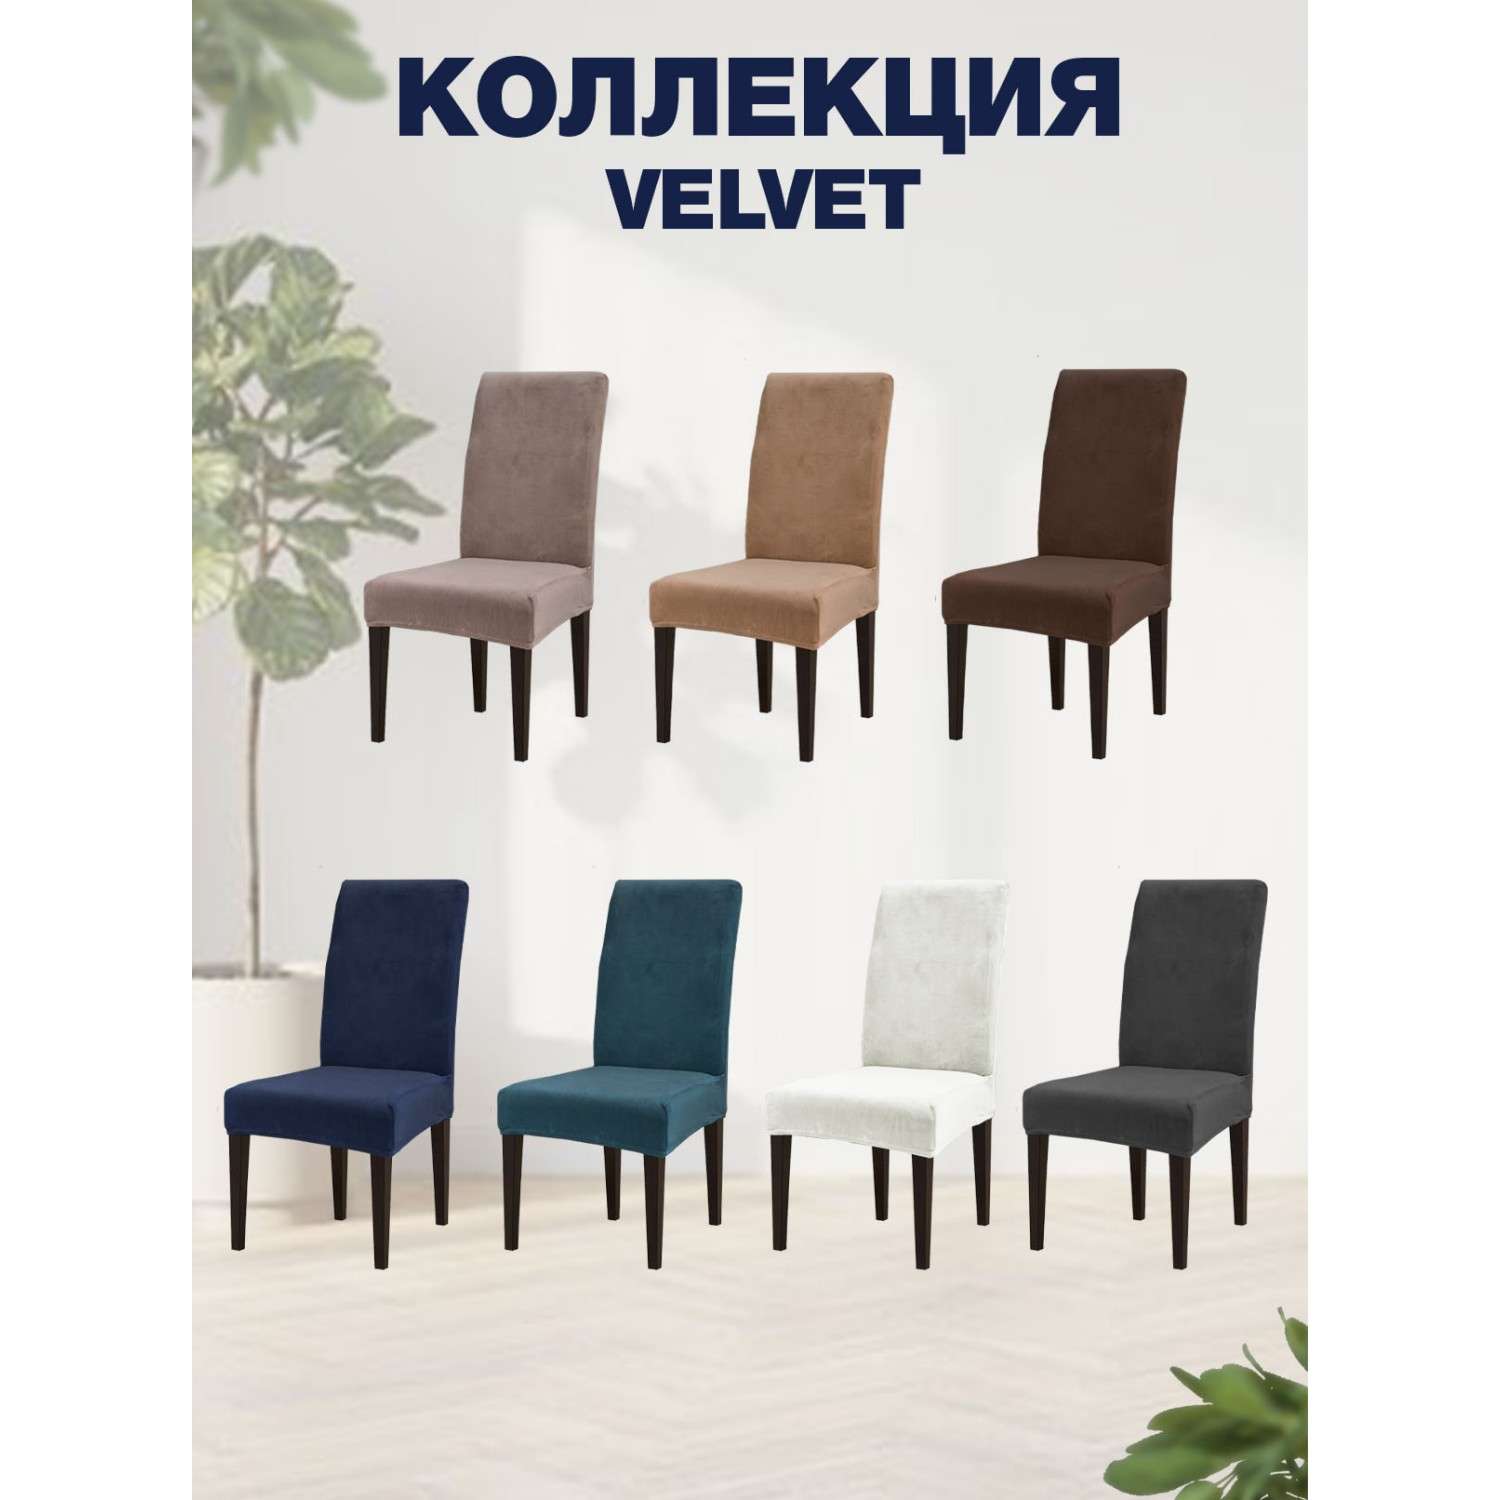 Чехол на стул LuxAlto Коллекция Velvet светло-коричневый - фото 3